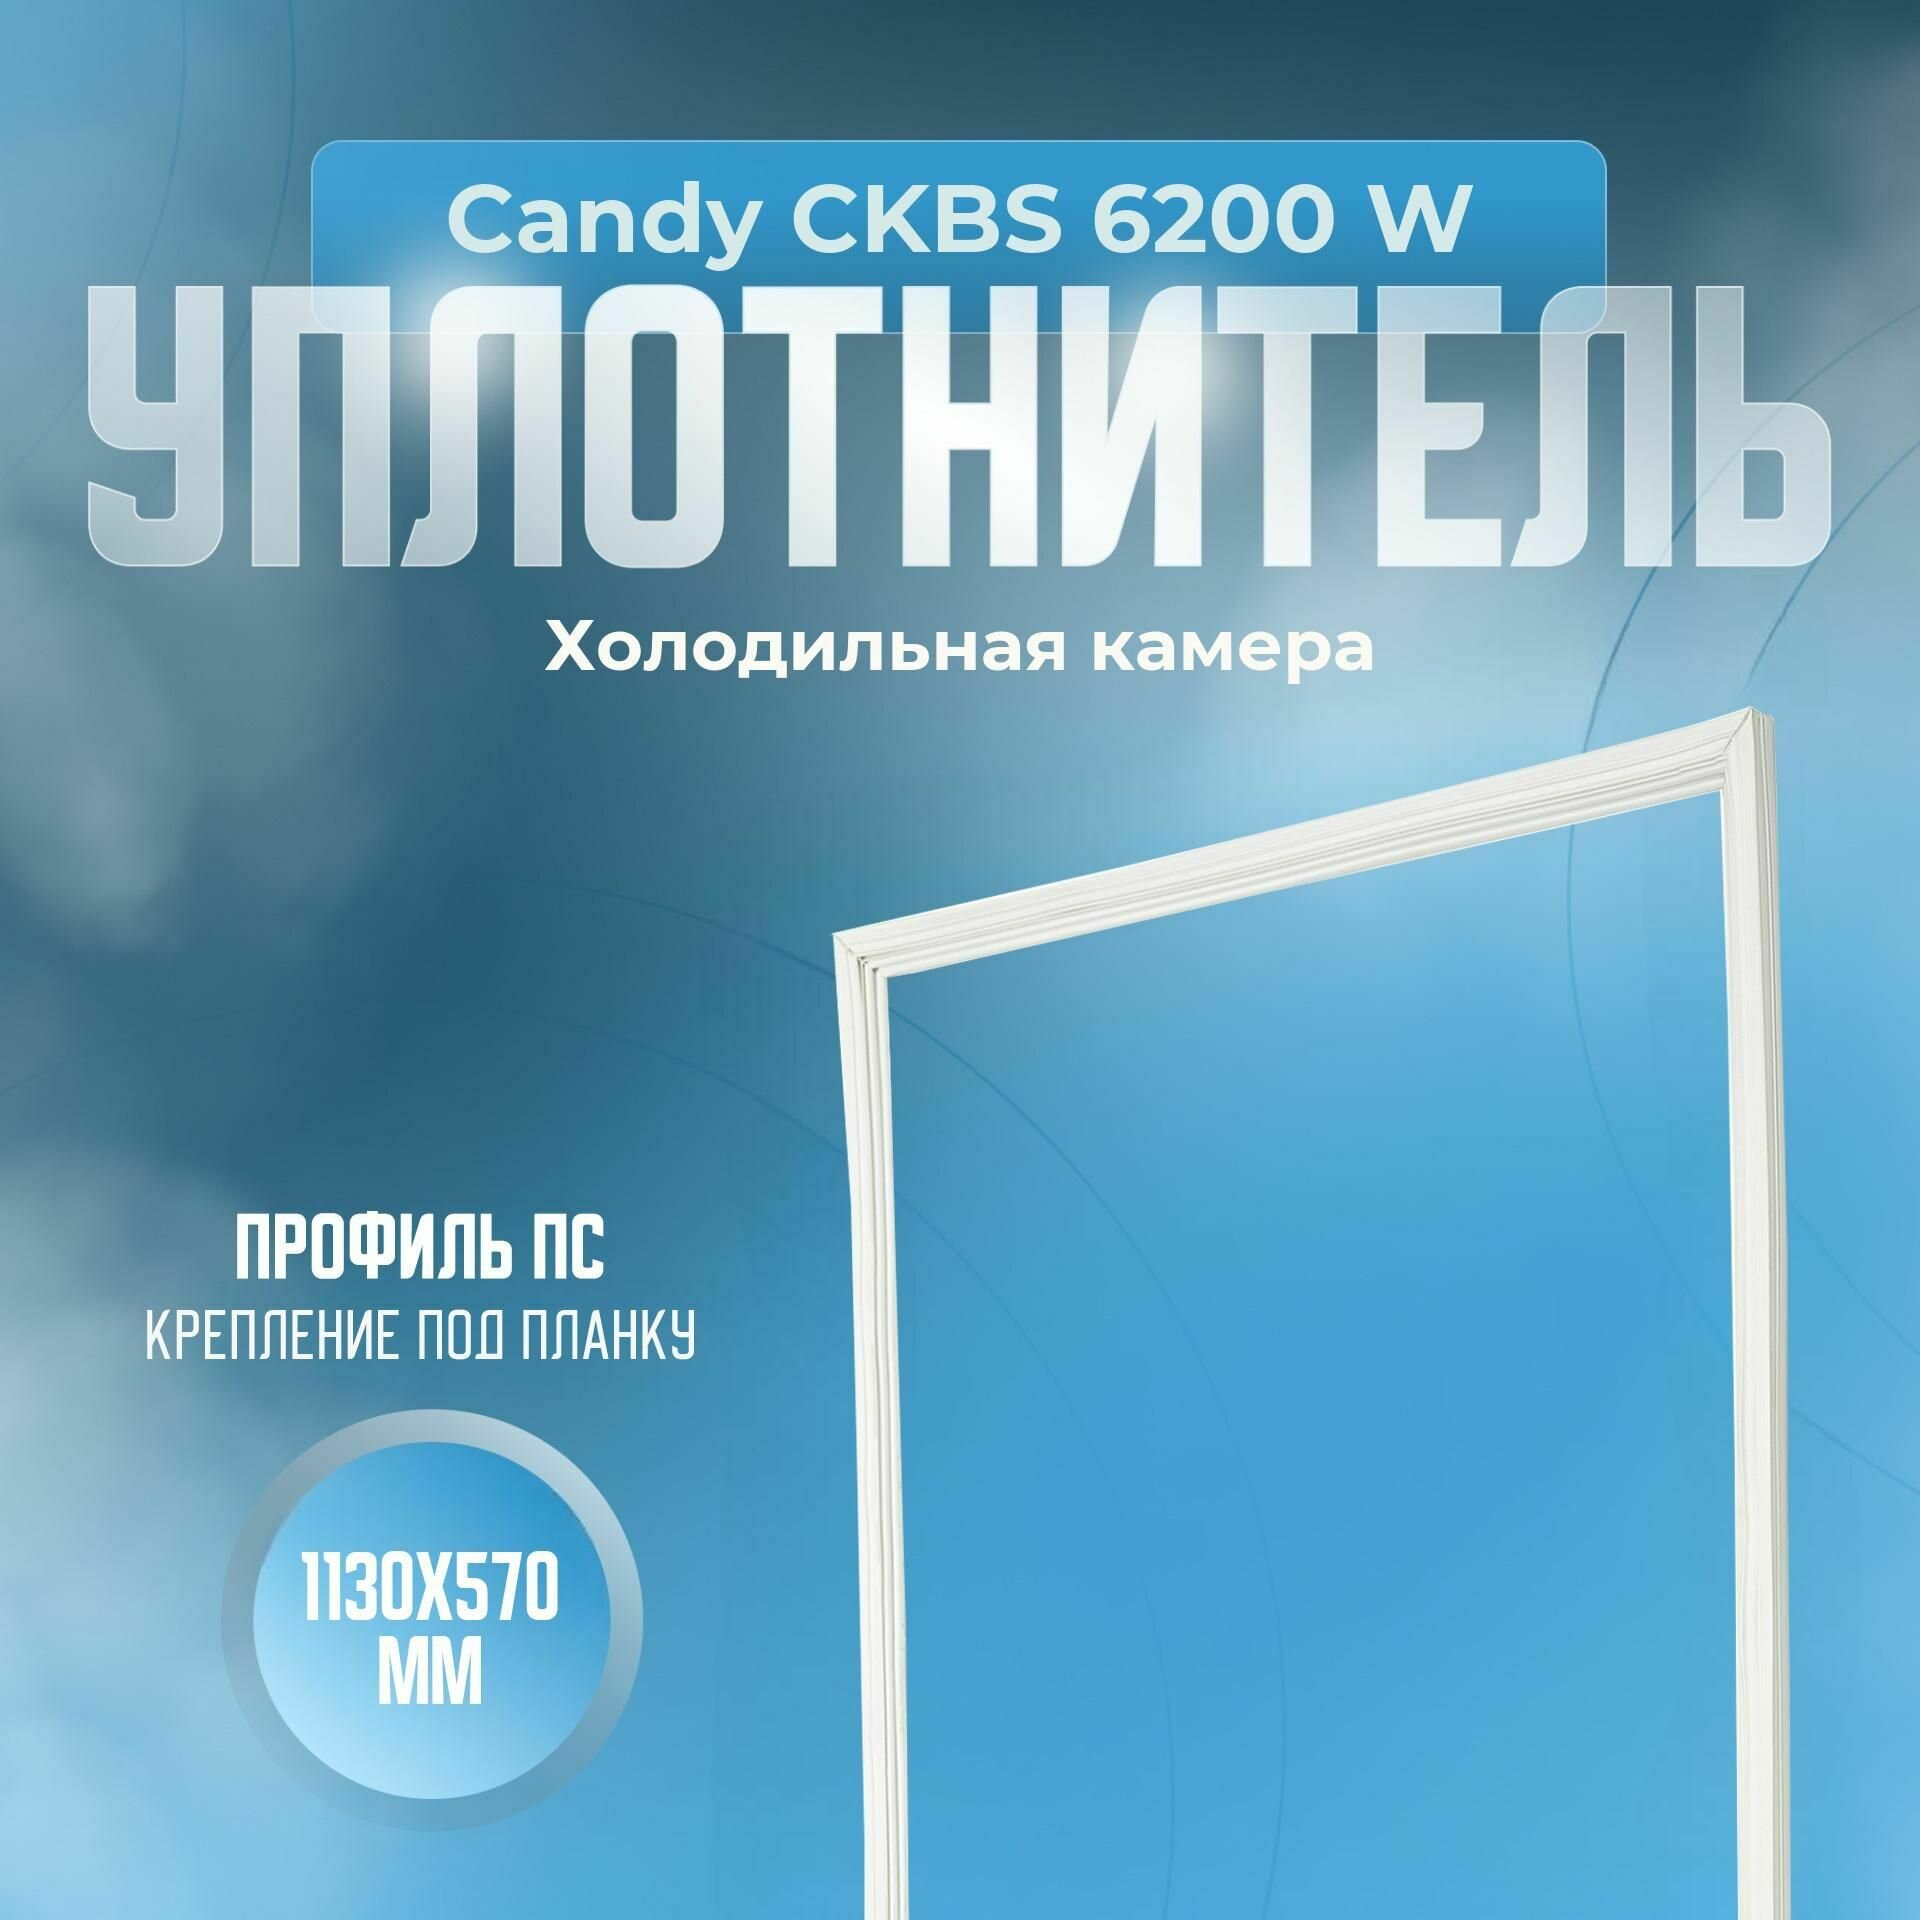 Уплотнитель Candy CKBS 6200 W. х. к, Размер - 1130x570 мм. ПС